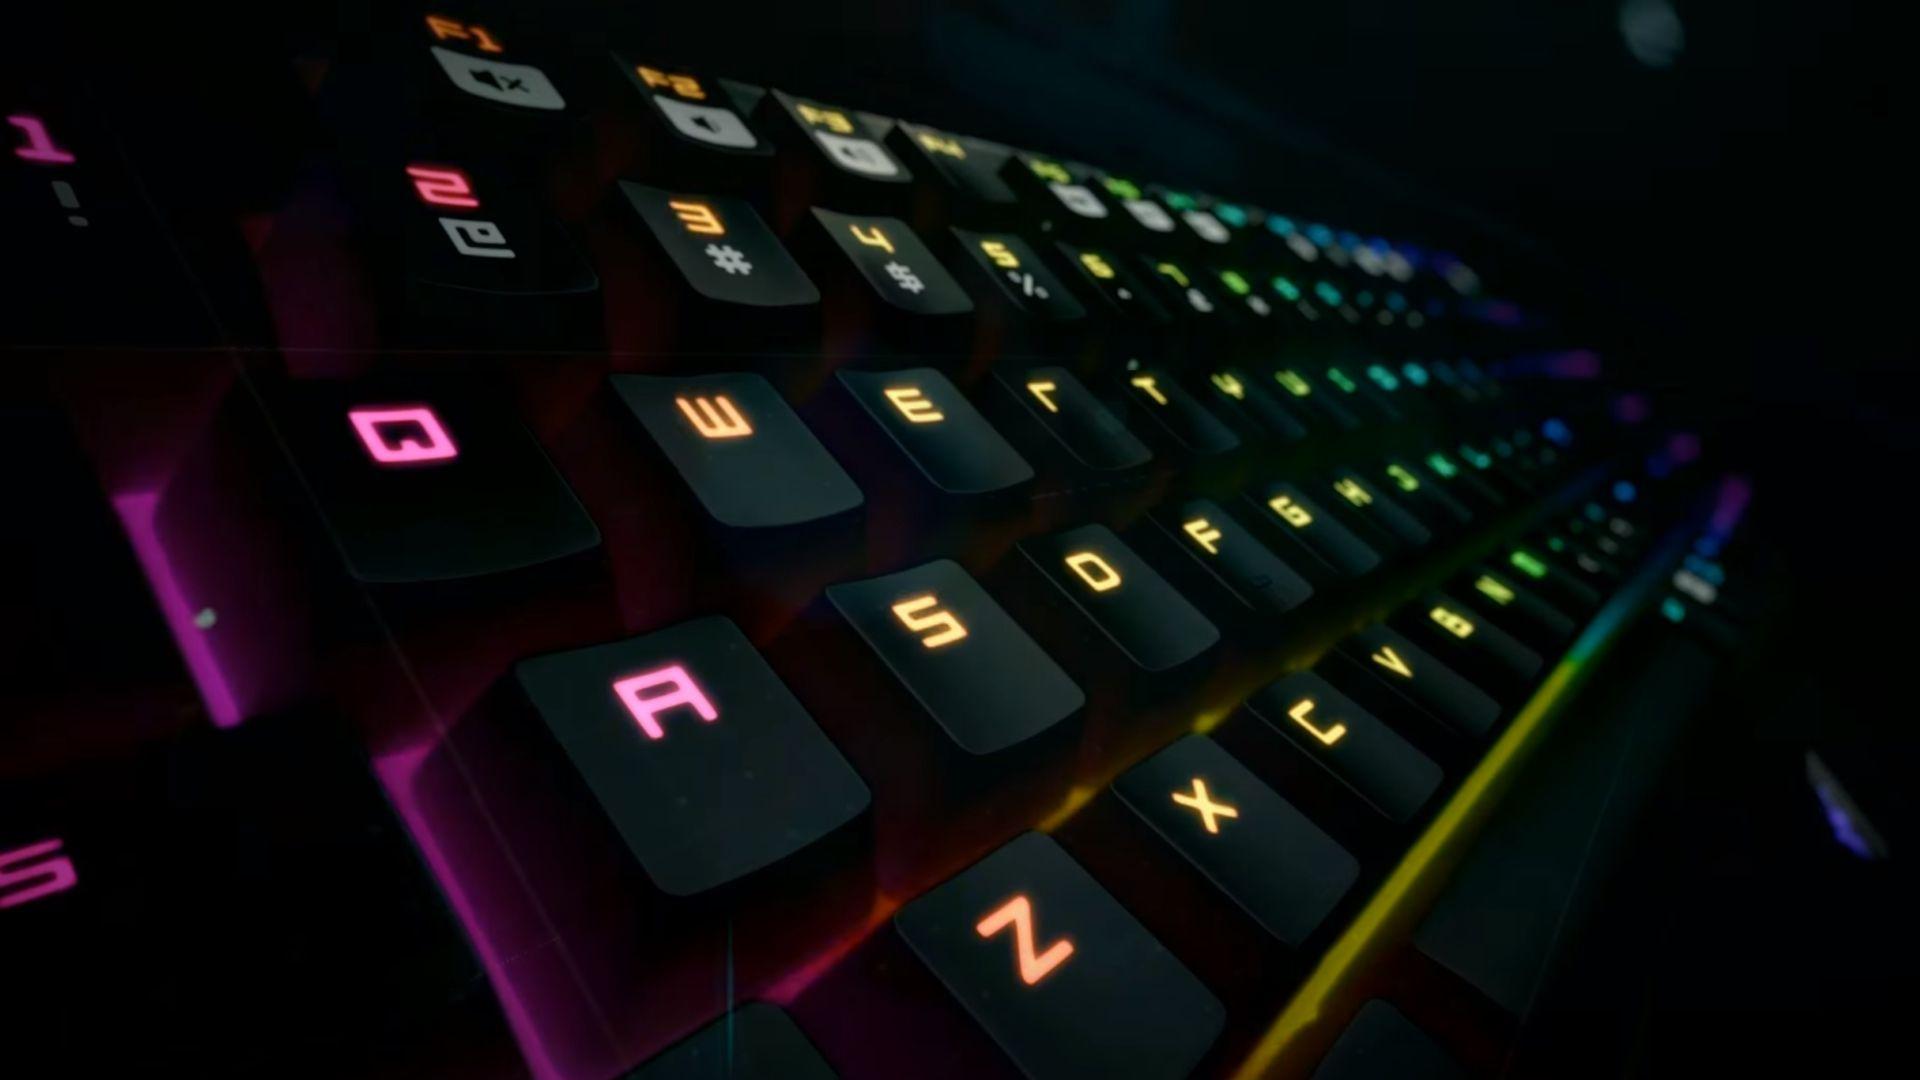 Gaming Keyboard Wallpapers Top Free Gaming Keyboard Backgrounds